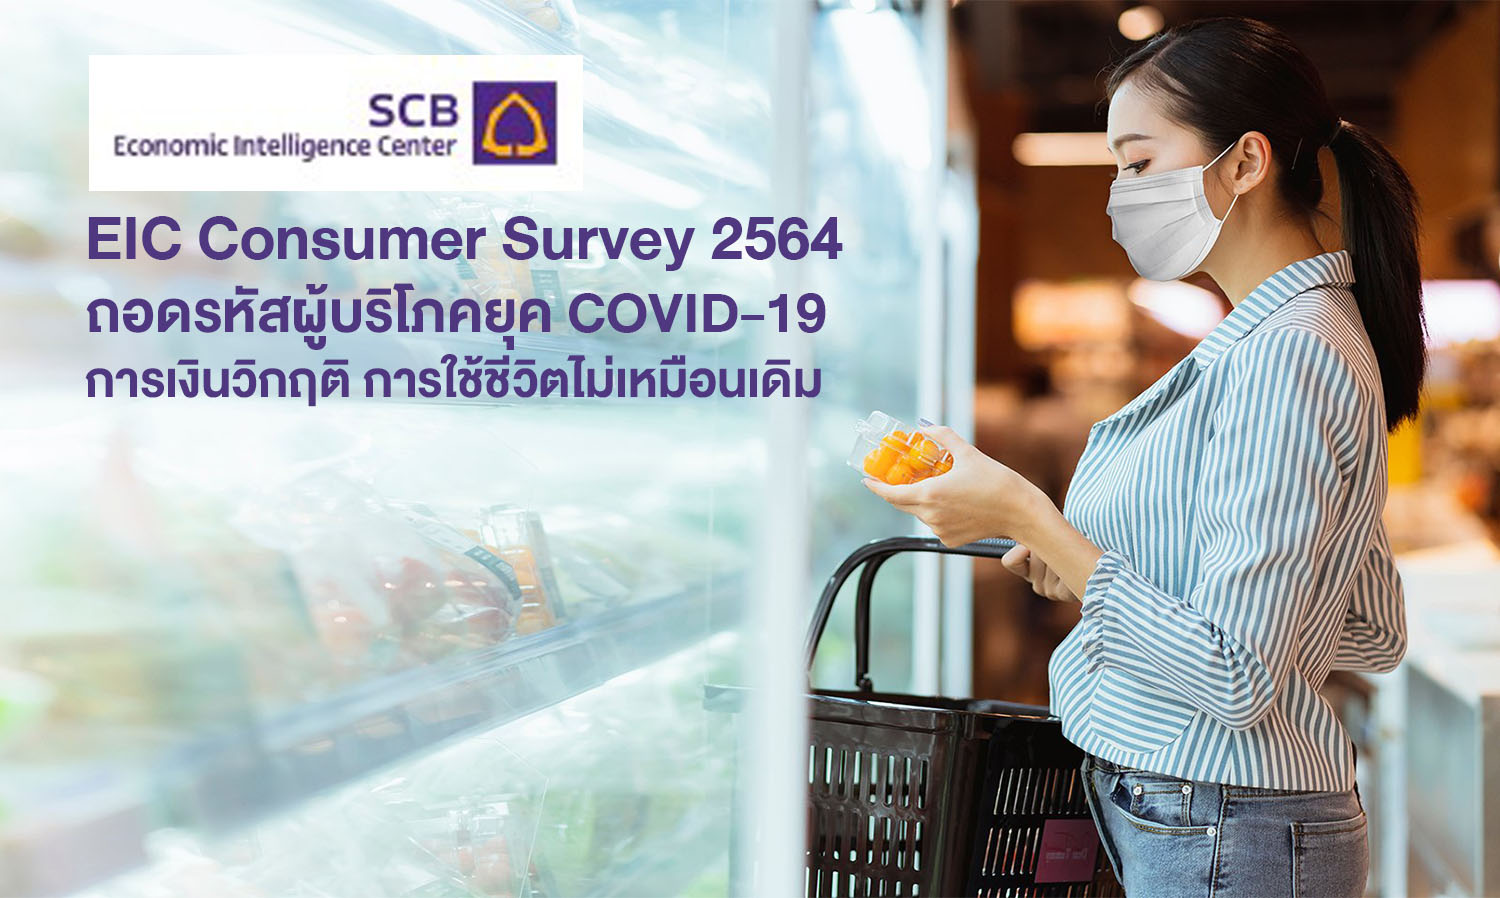 eic-consumer-survey-2564-ถอดรหัสผู้บริโภคยุค-covid-19-การเงินวิกฤติ-การใช้ชีวิตไม่เหมือนเดิม